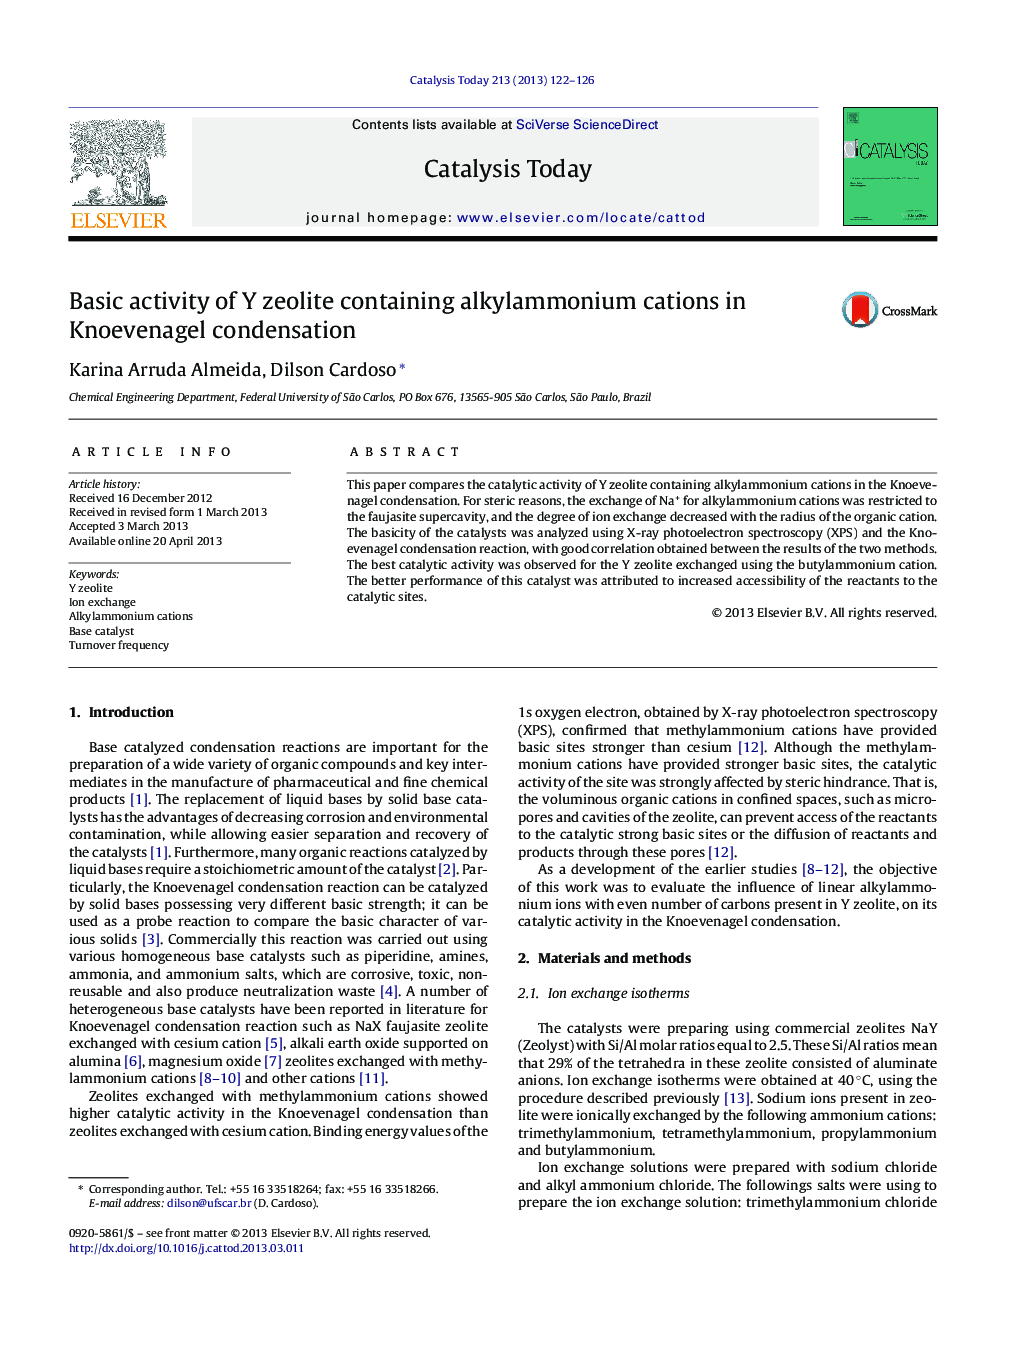 Basic activity of Y zeolite containing alkylammonium cations in Knoevenagel condensation